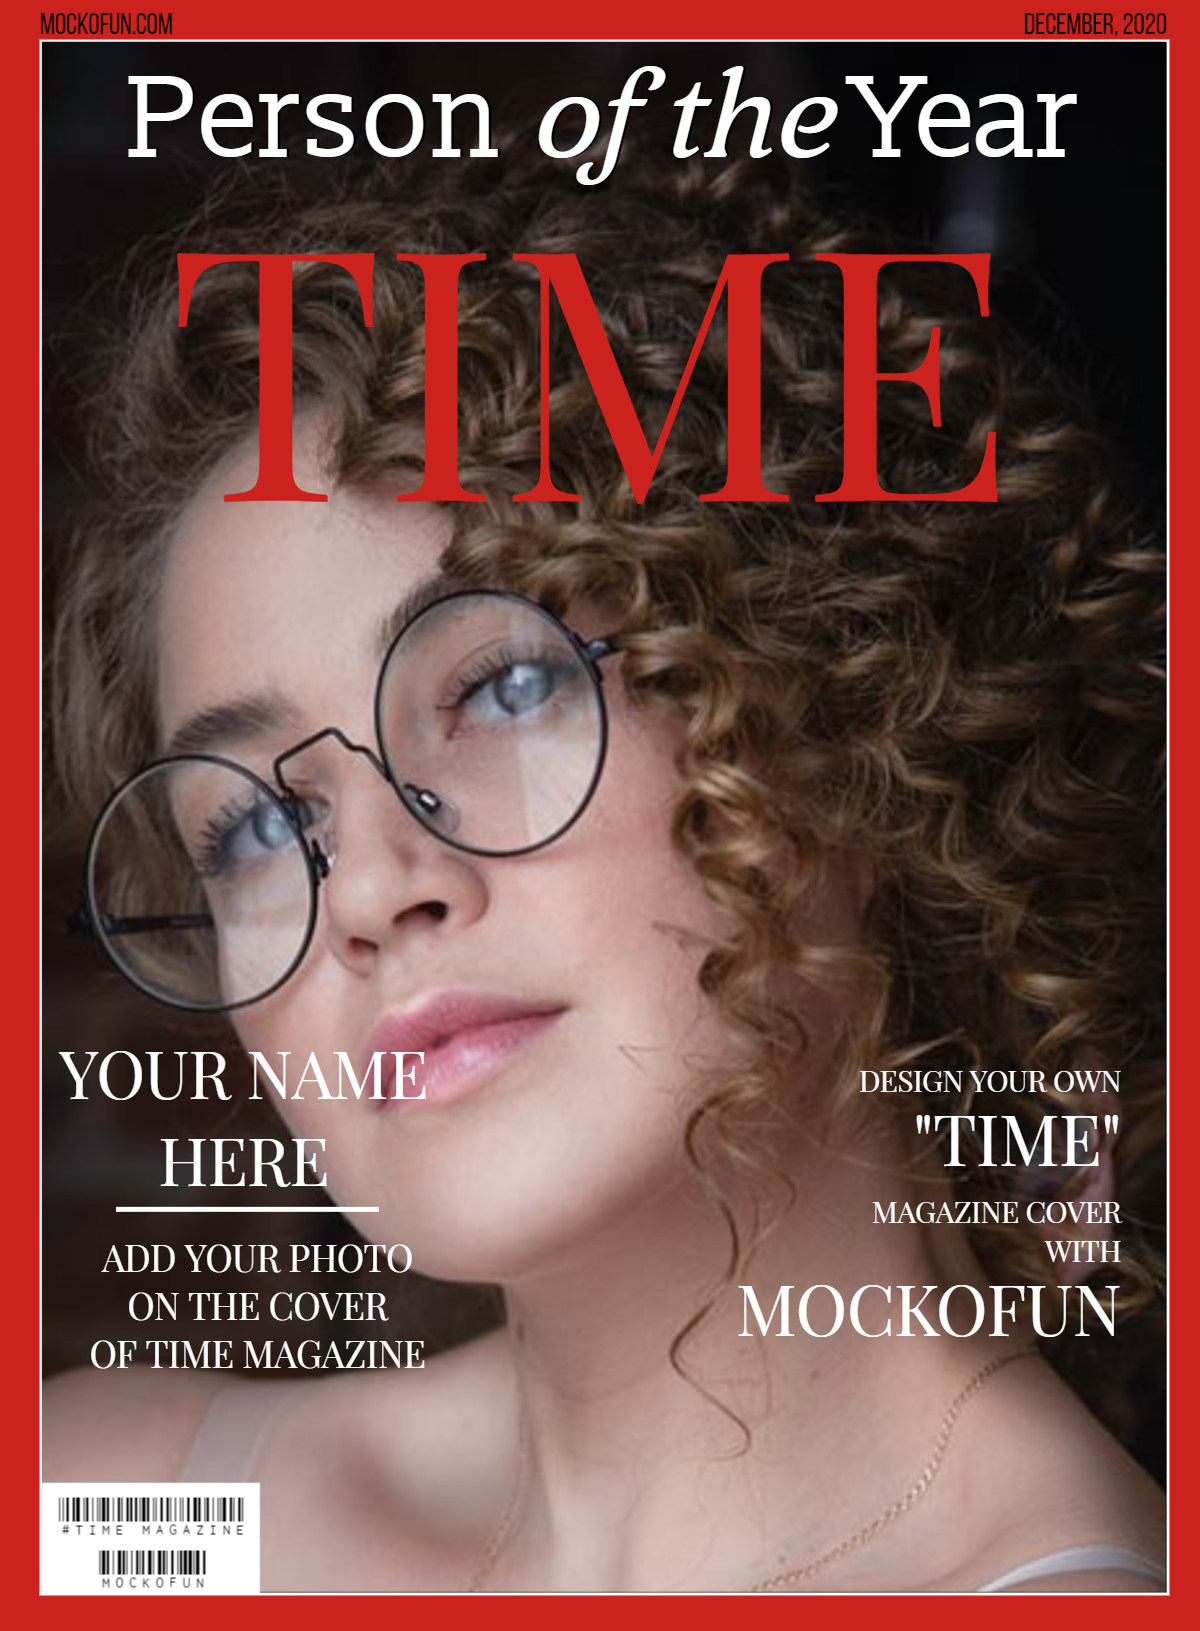 [FREE] Time Magazine Cover Template MockoFUN